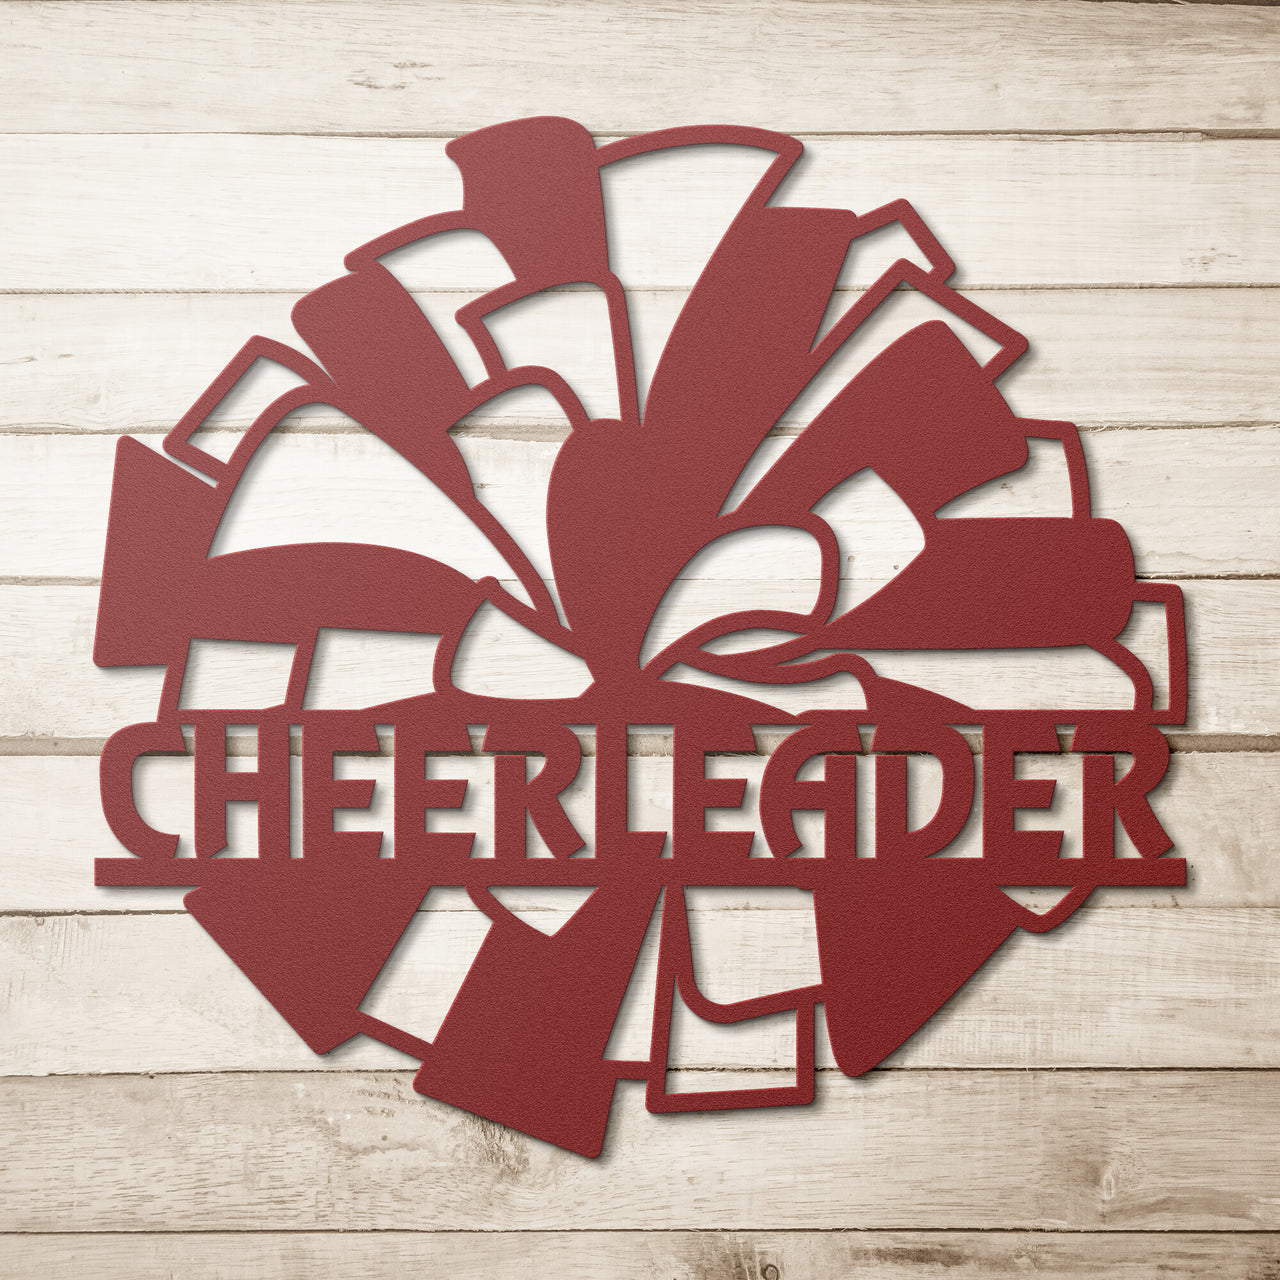 Cheerleader pp -1C Mascot Steel Wall Art